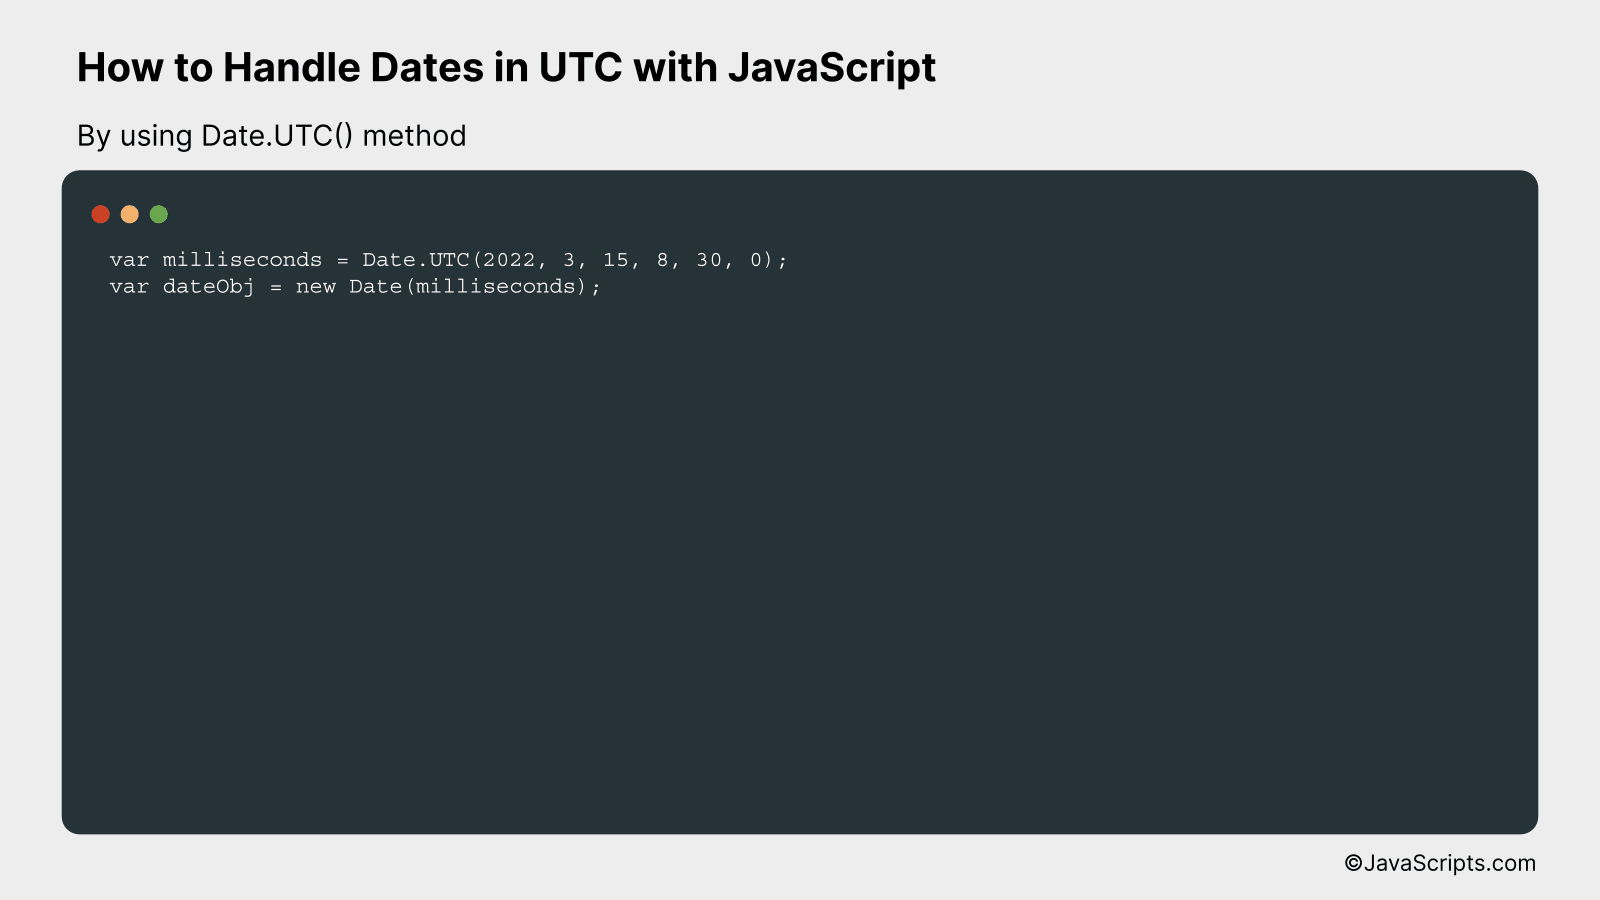 By using Date.UTC() method